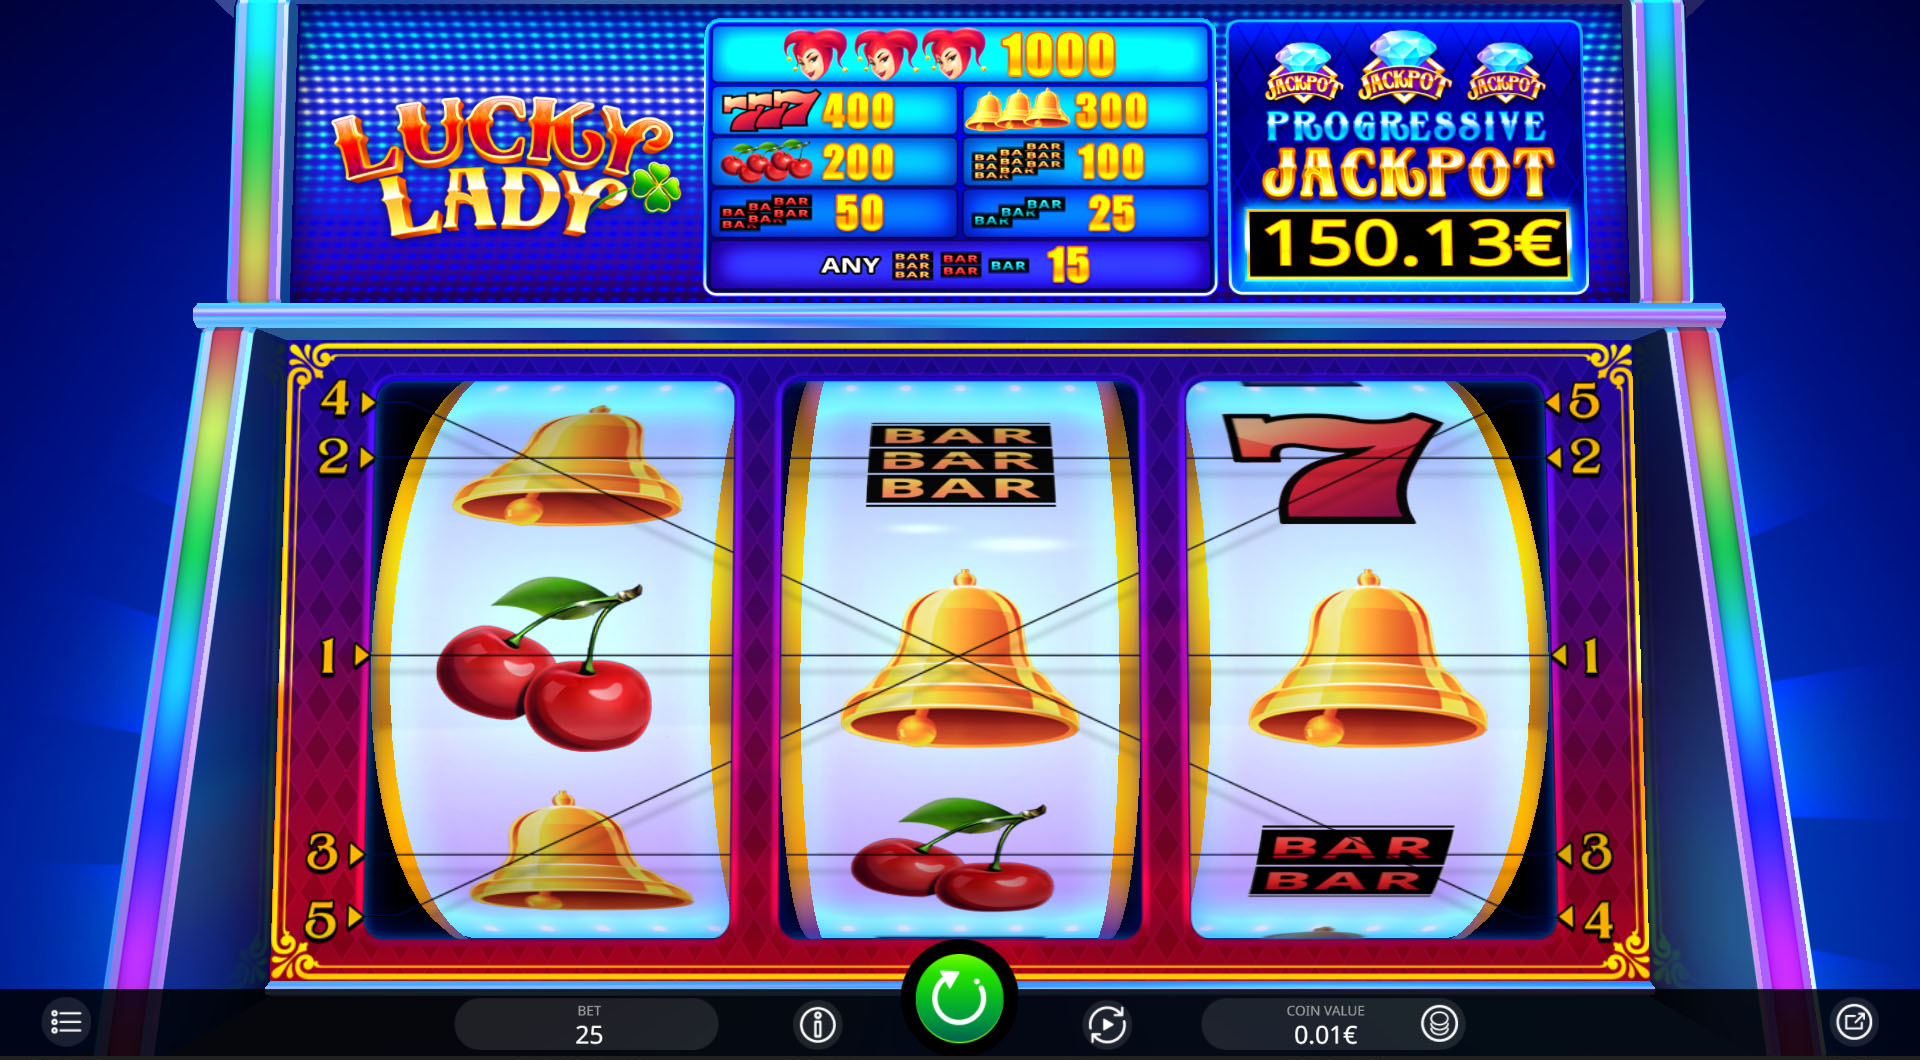 Lucky Lady Dice - Interface on betFIRST Casino